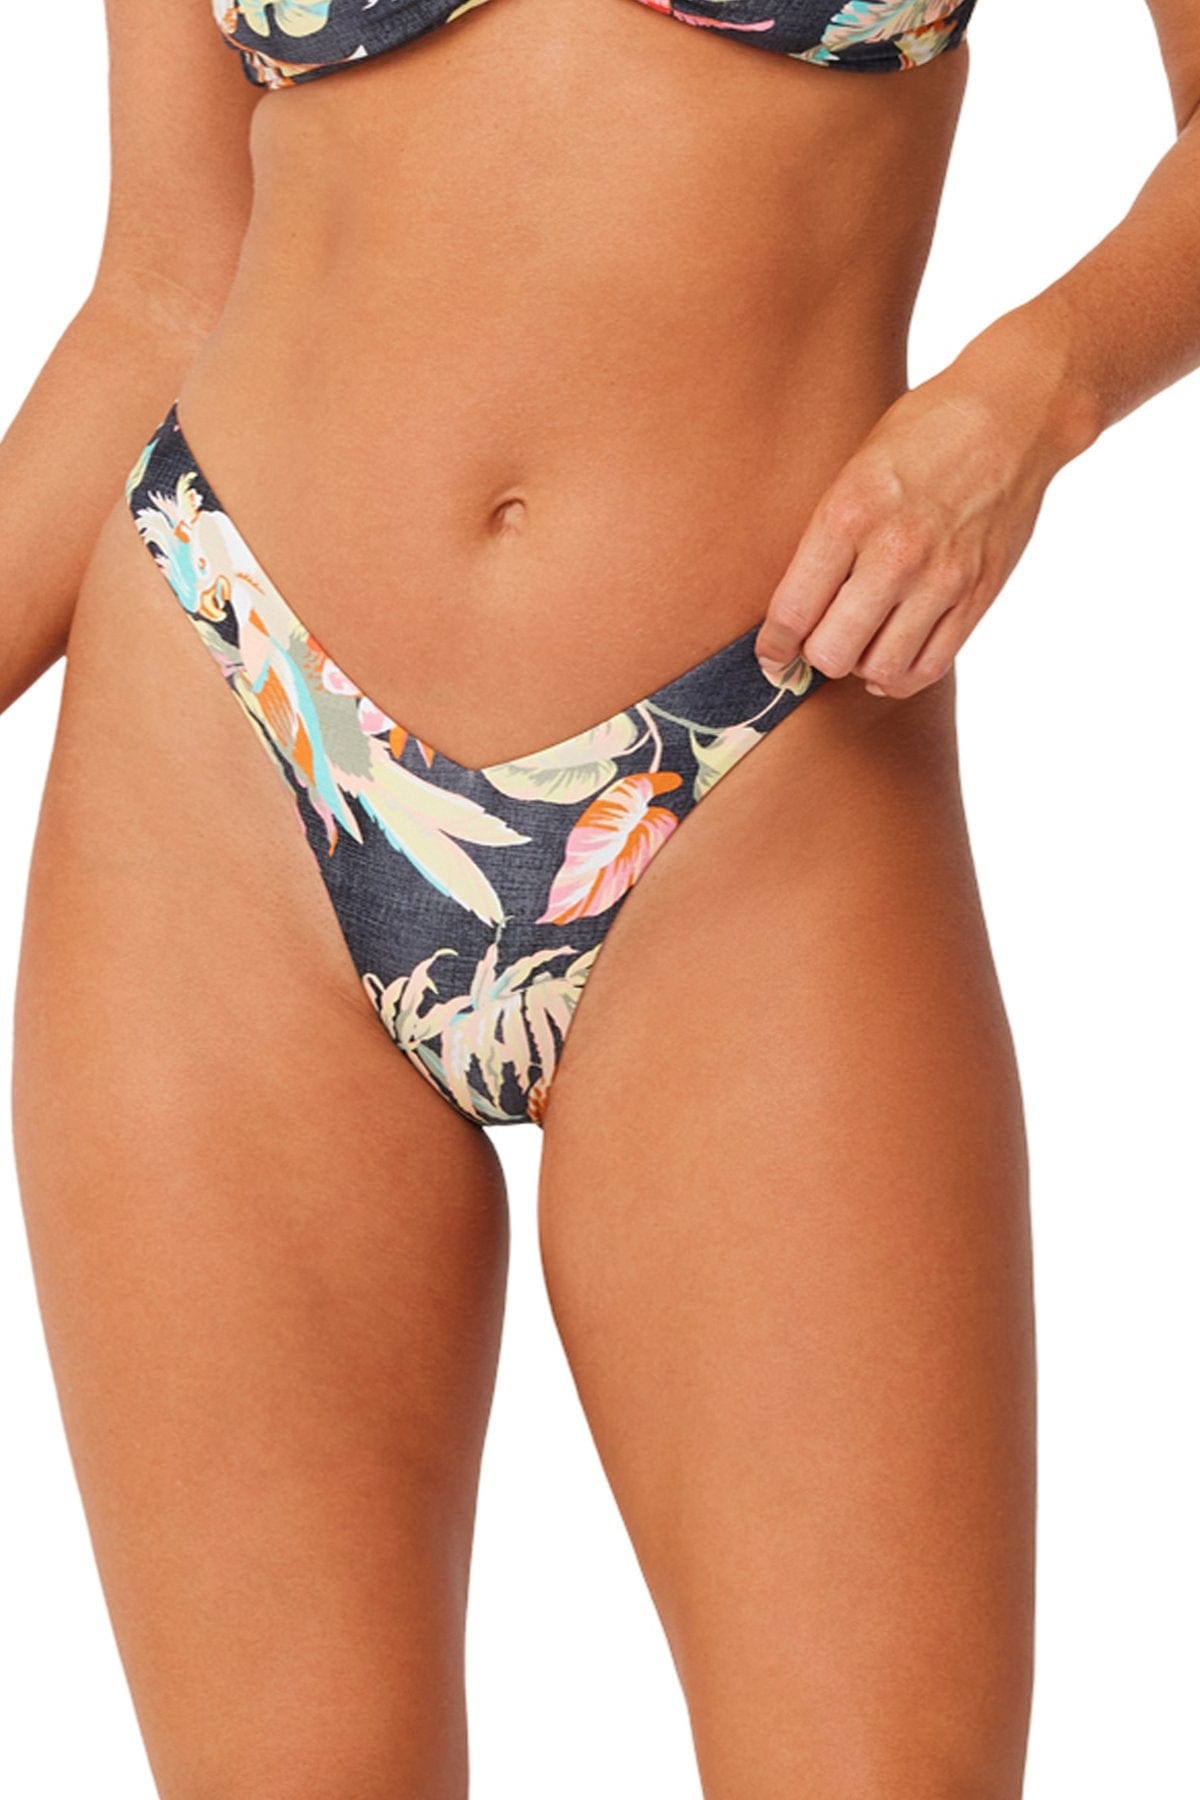 Mystique Skimpy V Pant - Monte and Lou - Splash Swimwear  - Bikini Bottom, Monte & Lou, SALE, sept21 - Splash Swimwear 